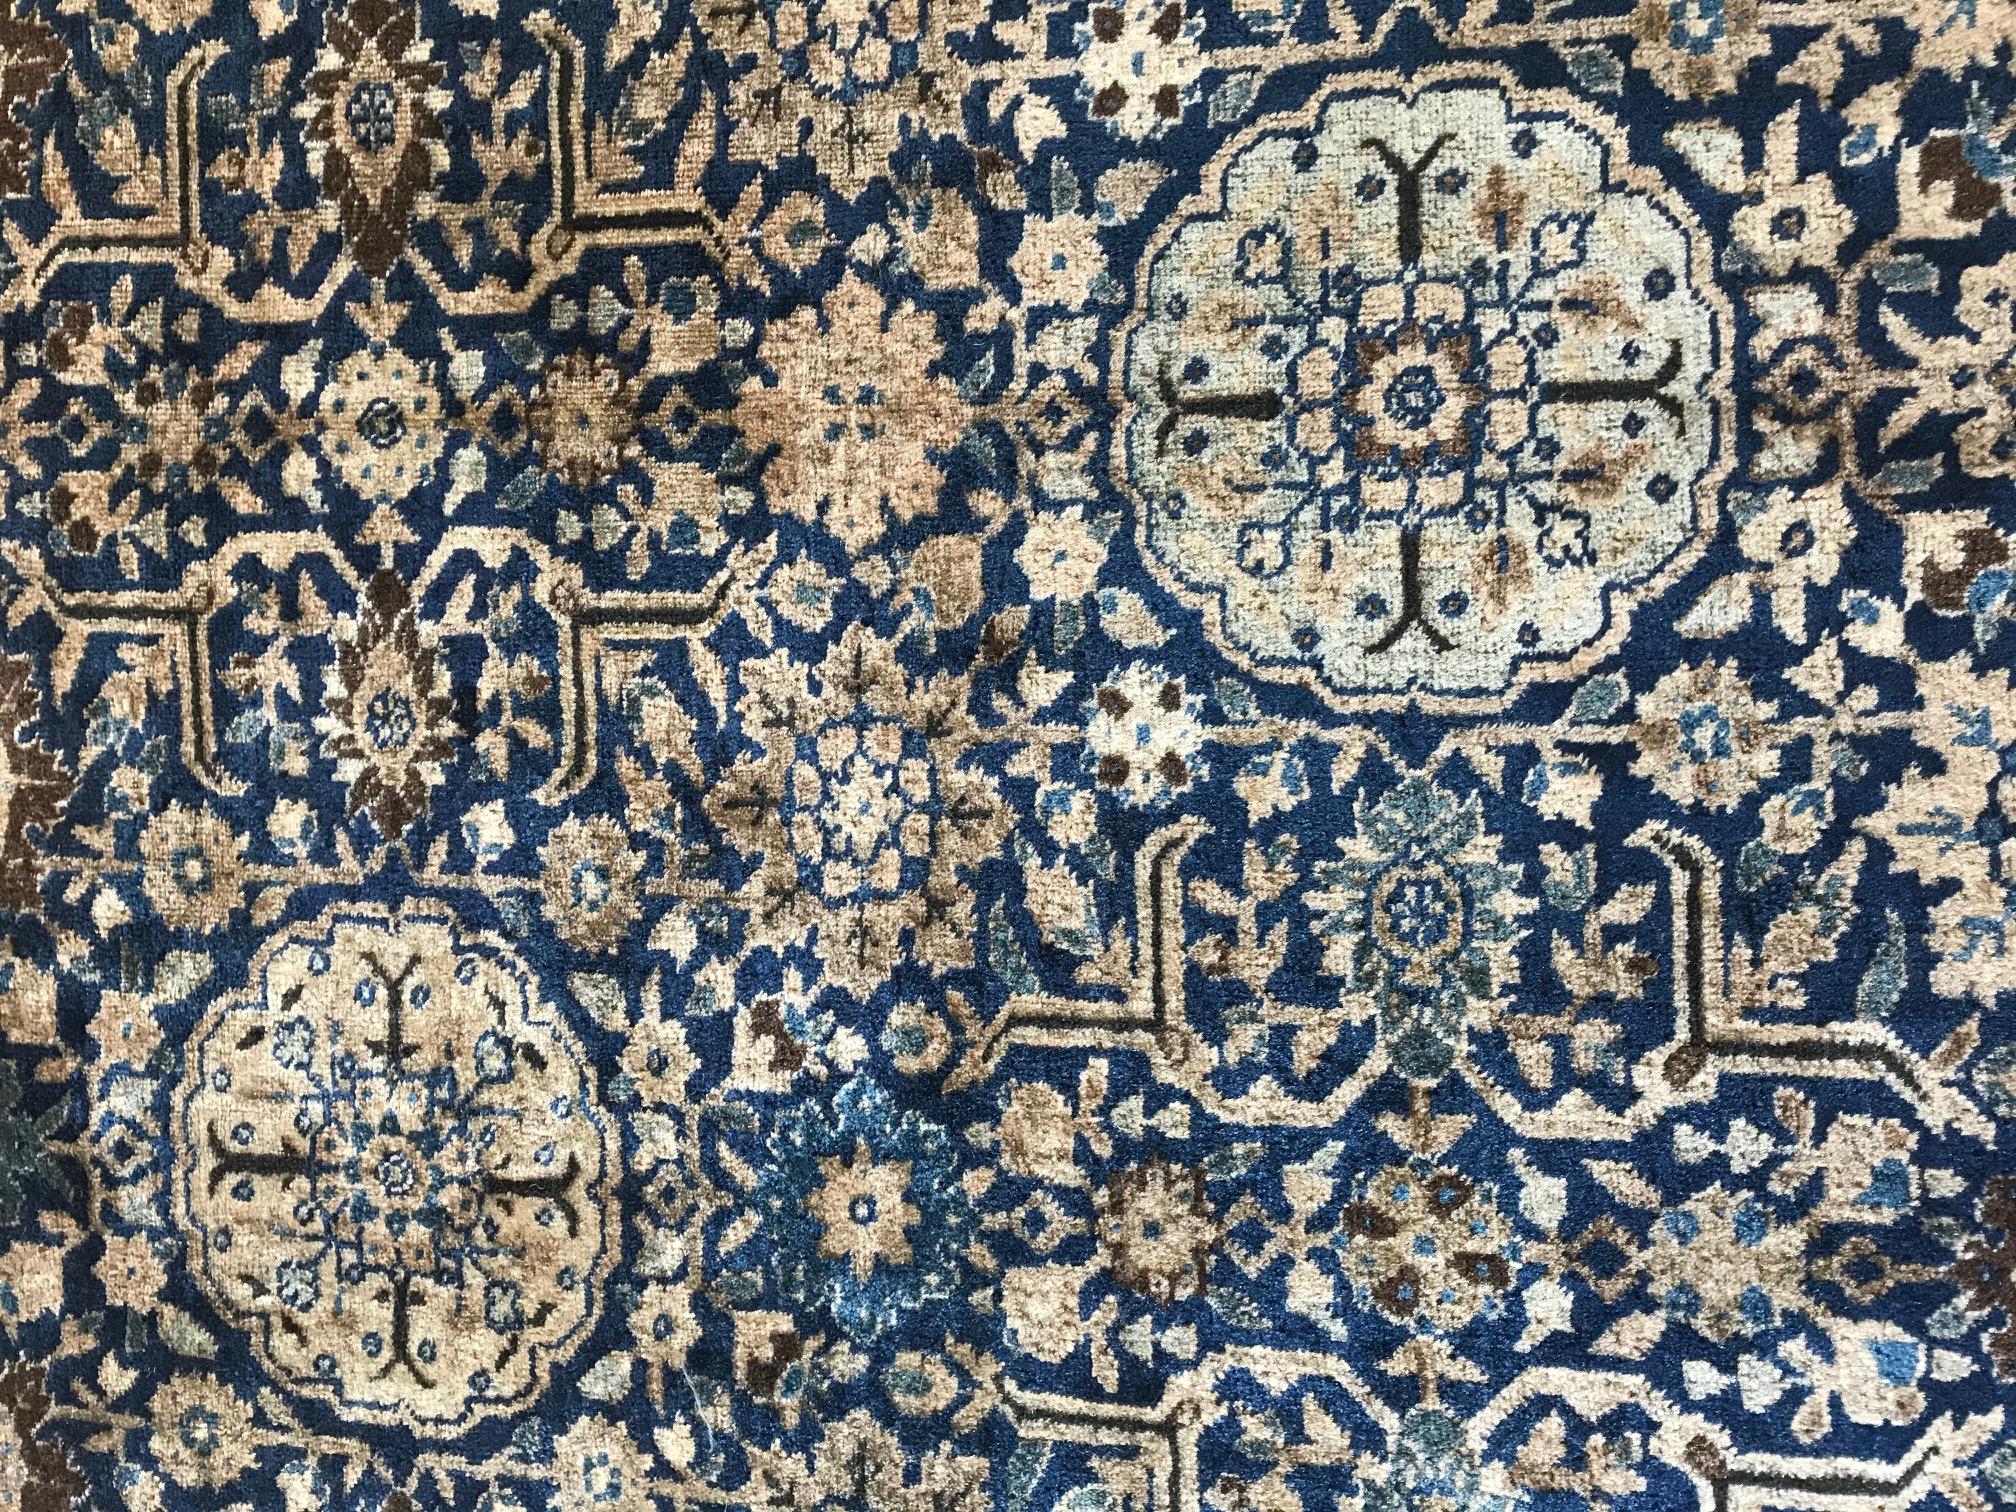 Oversized Persian Tabriz Blue, Beige Handmade Rug 'Size Adjusted'
Size: 15'0